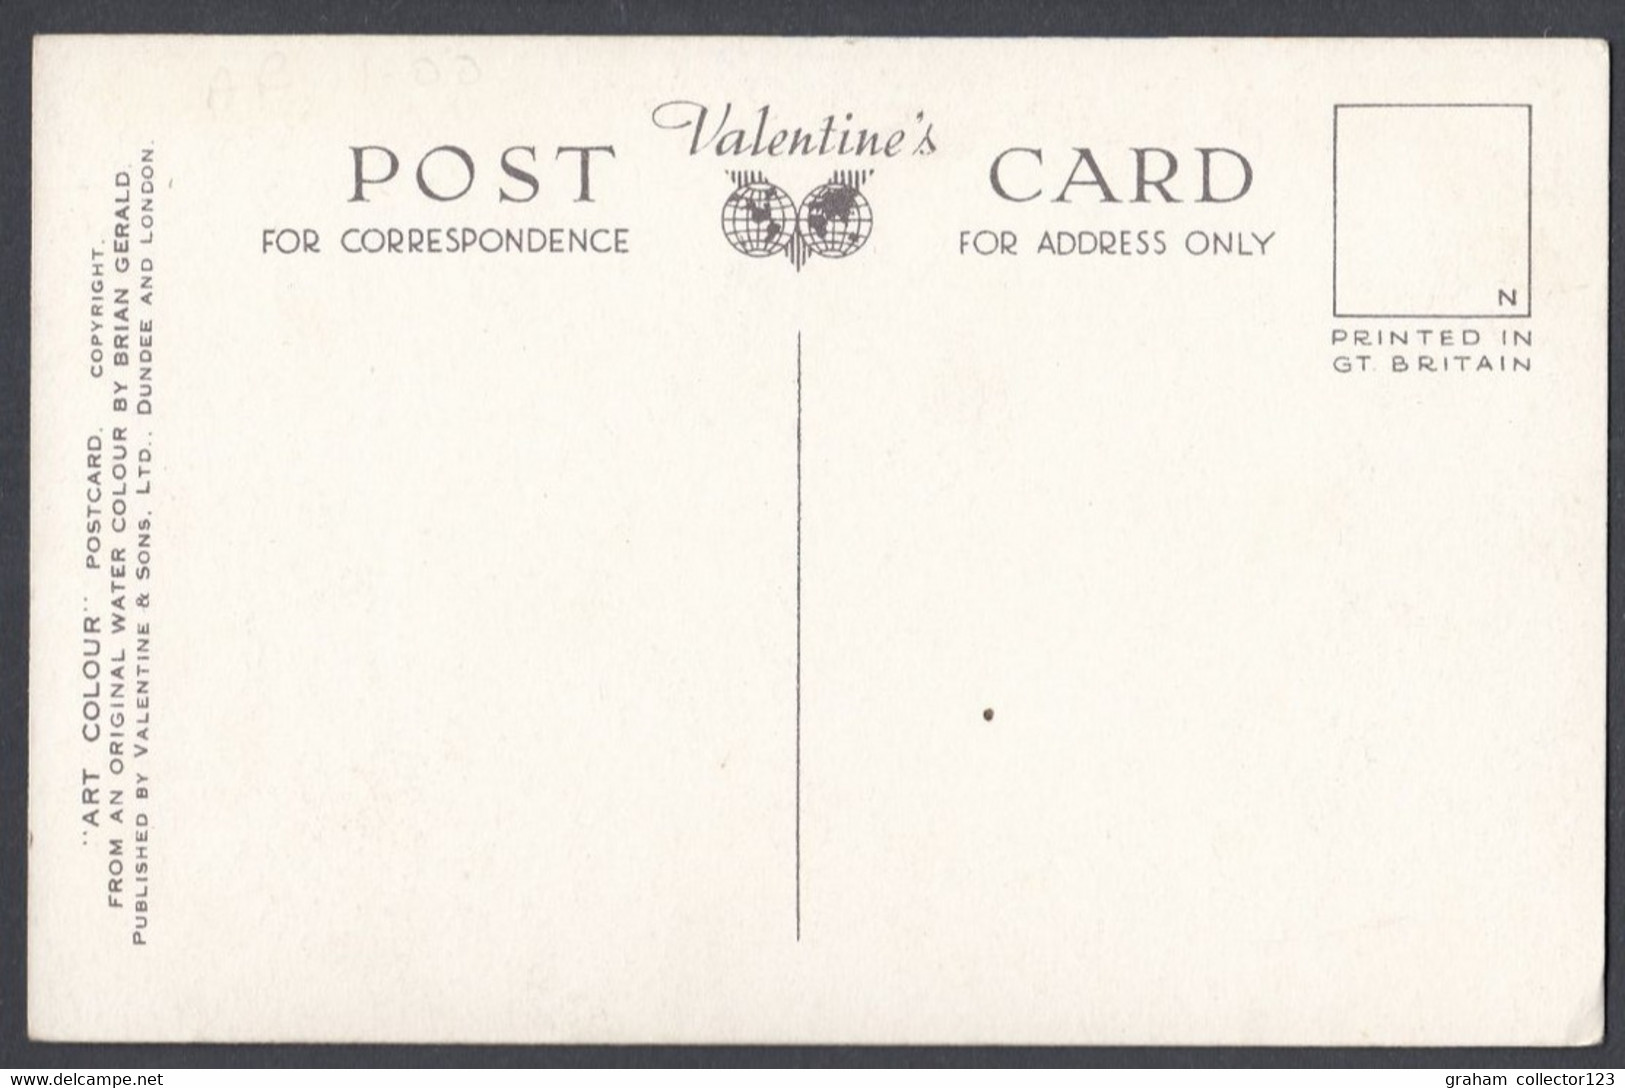 Vintage Postcard Postale Carte Postkarte High Street Clovelly Devon - Clovelly